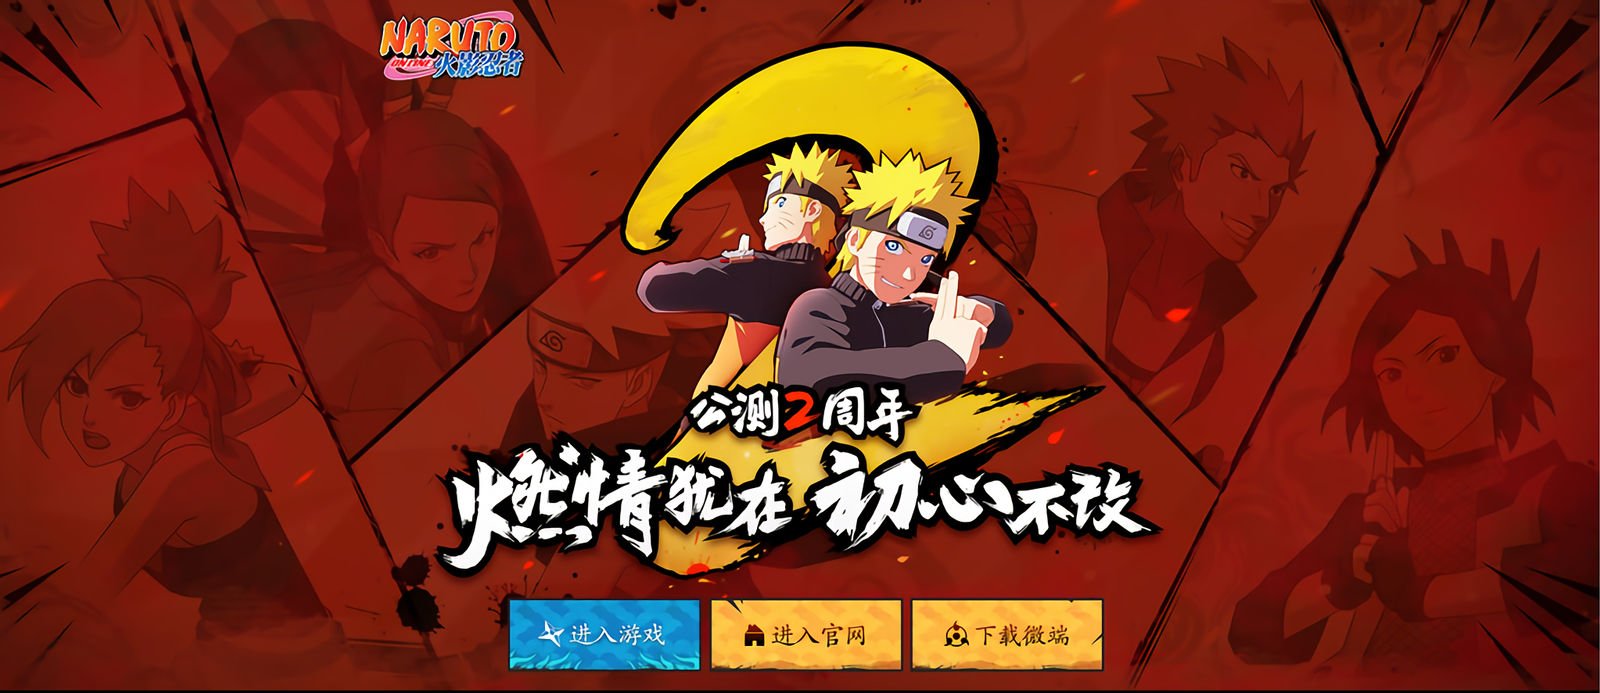 Naruto Online: 2 Year CN Website Home Screen by EveBlaze31 on DeviantArt